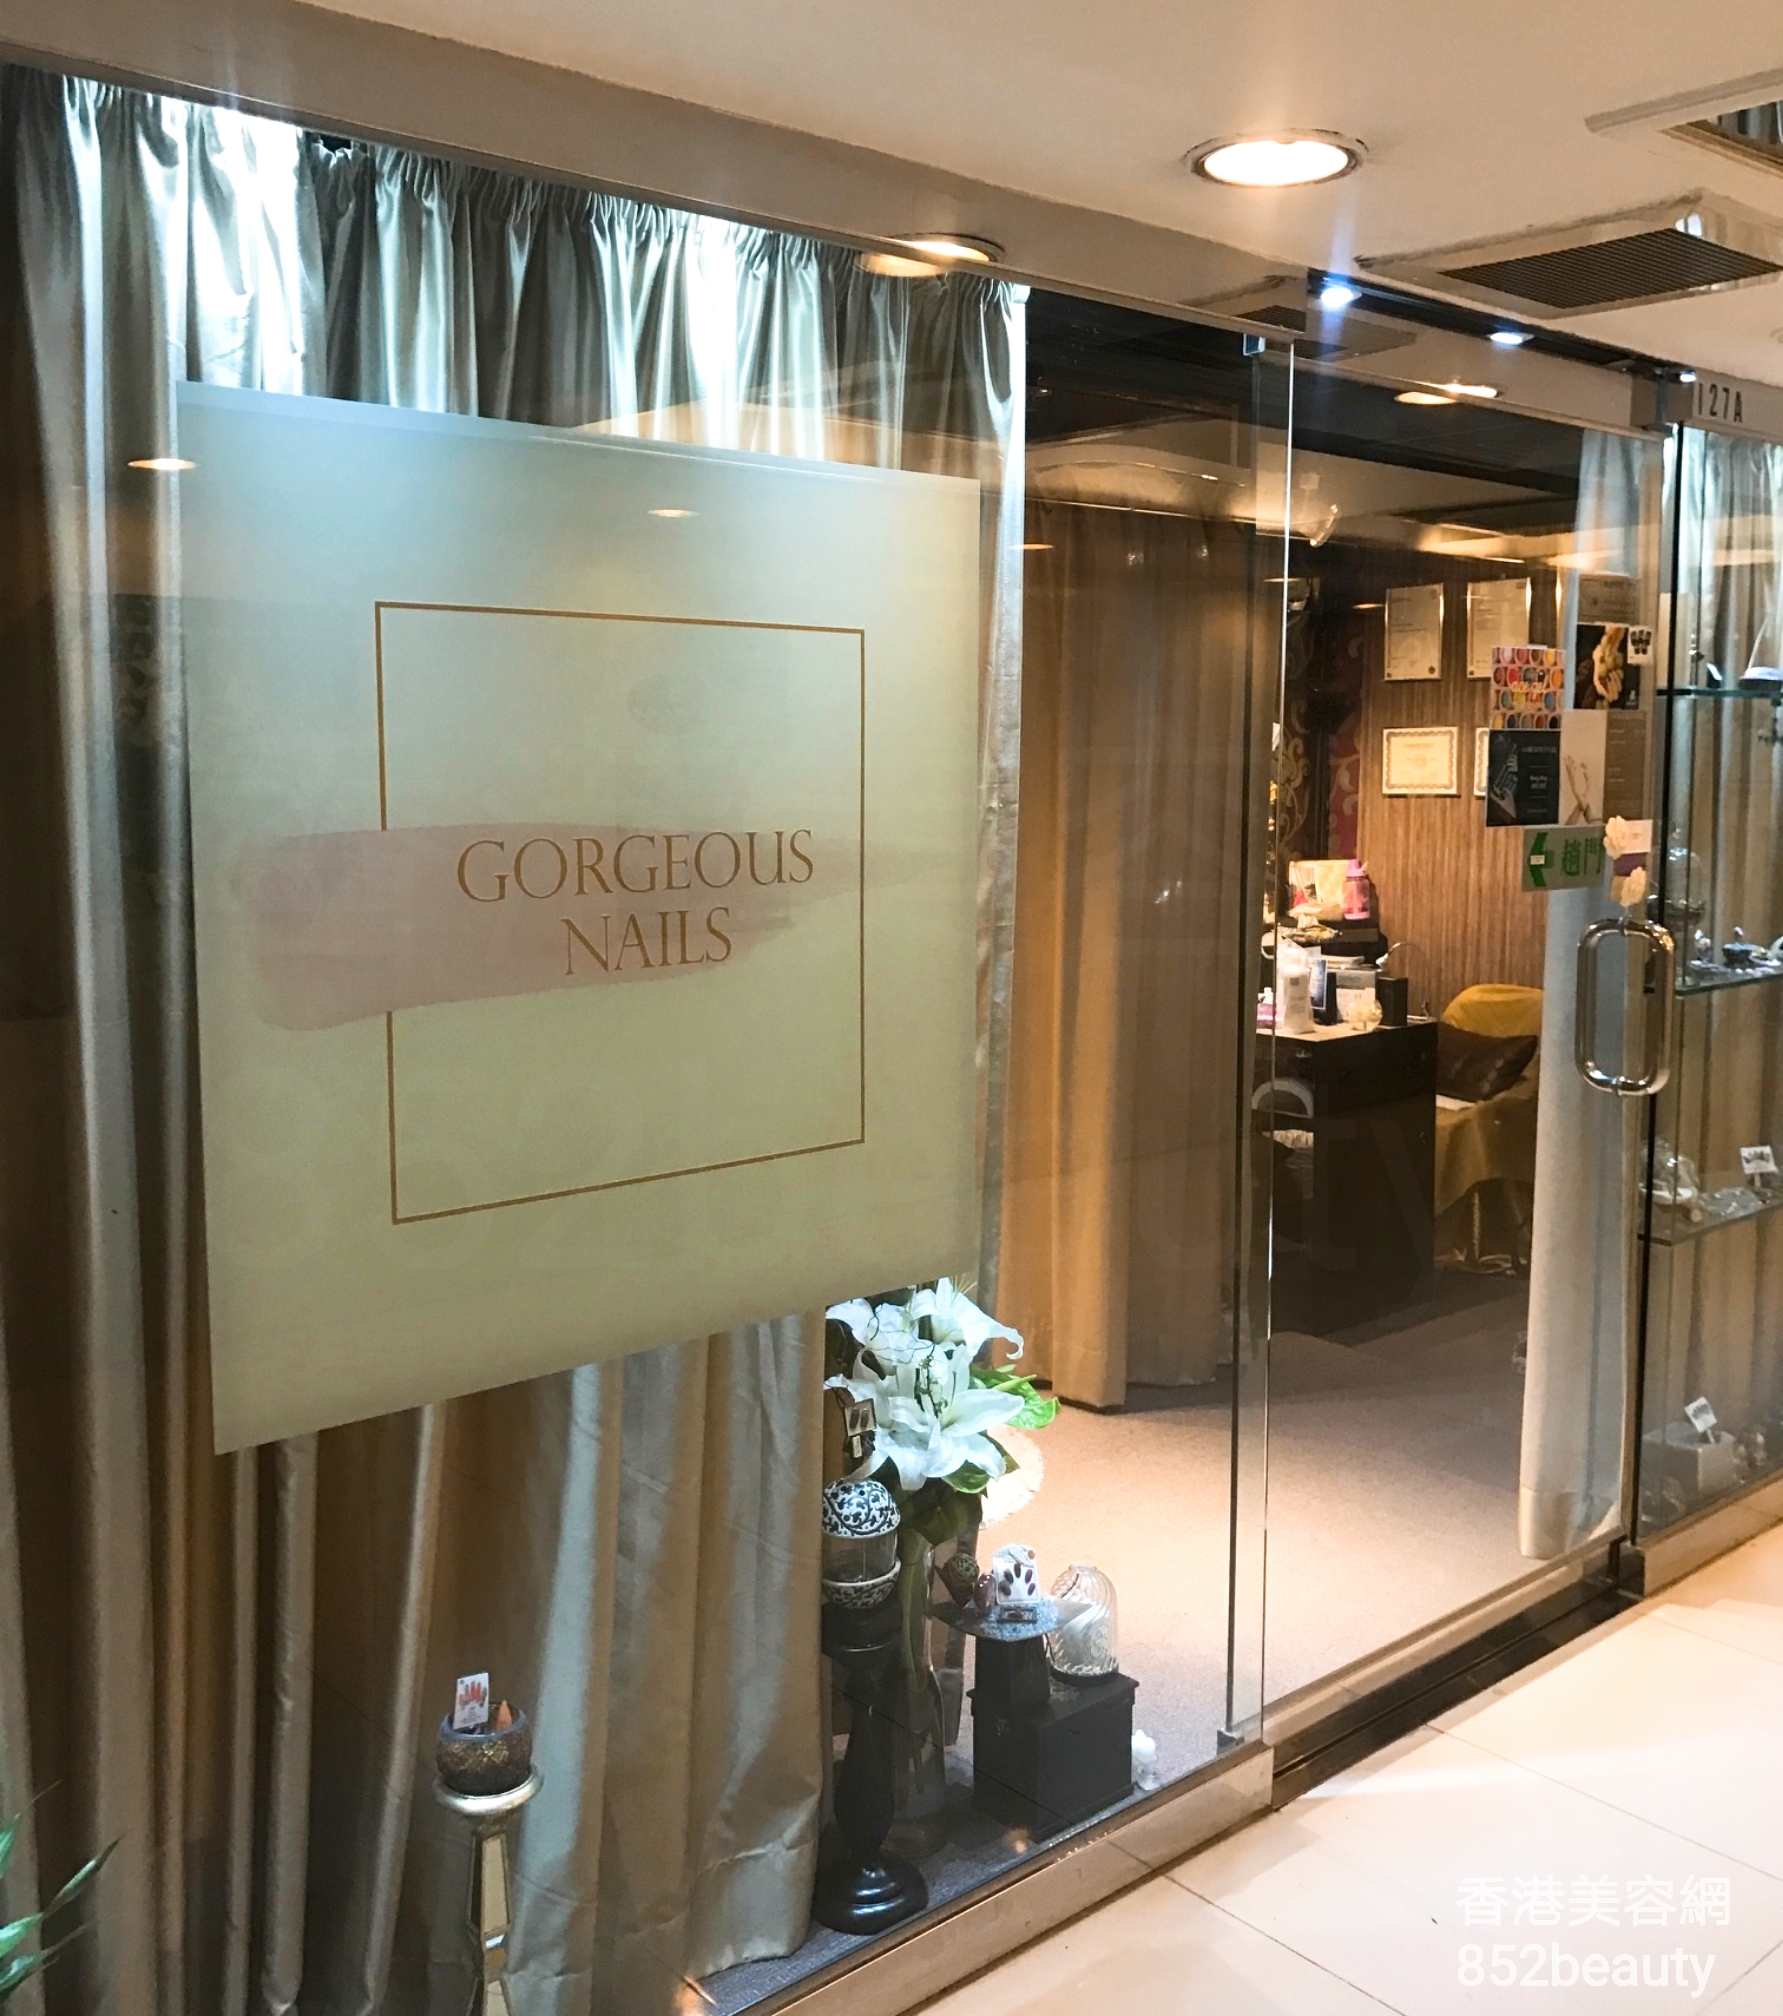 香港美容網 Hong Kong Beauty Salon 美容院 / 美容師: GORGEOUS NAILS